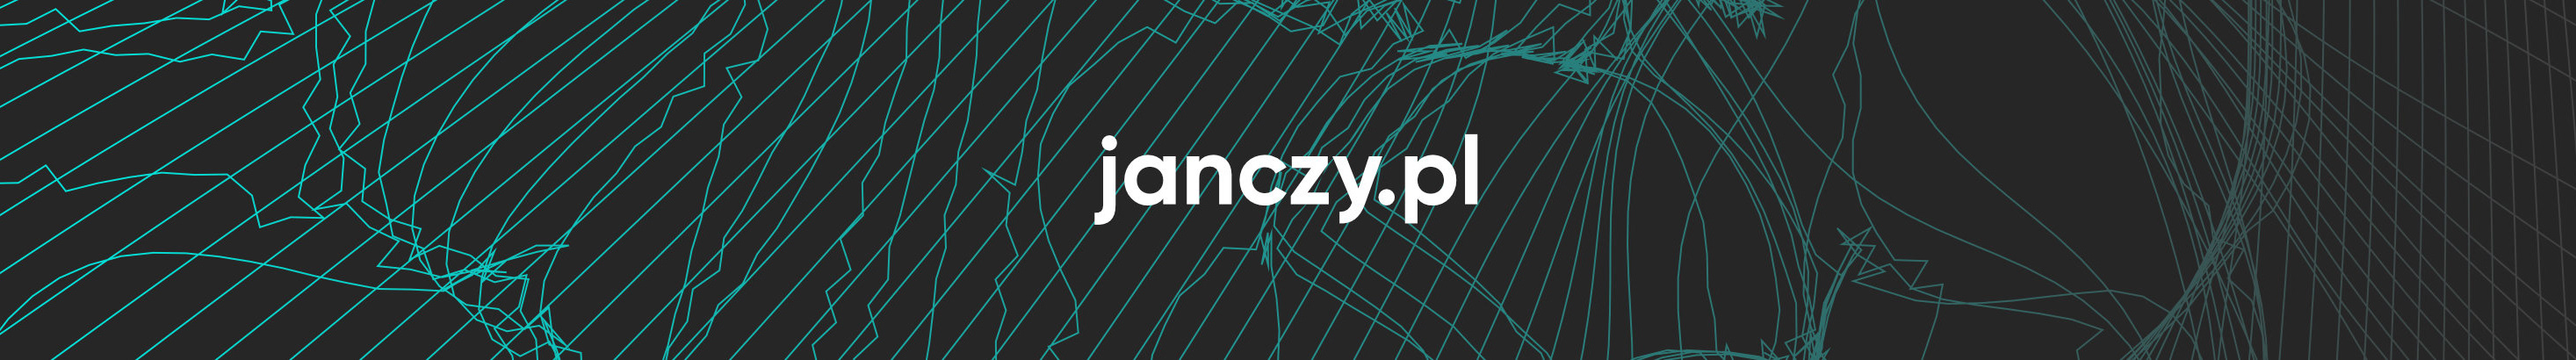 Kacper Janczy's profile banner